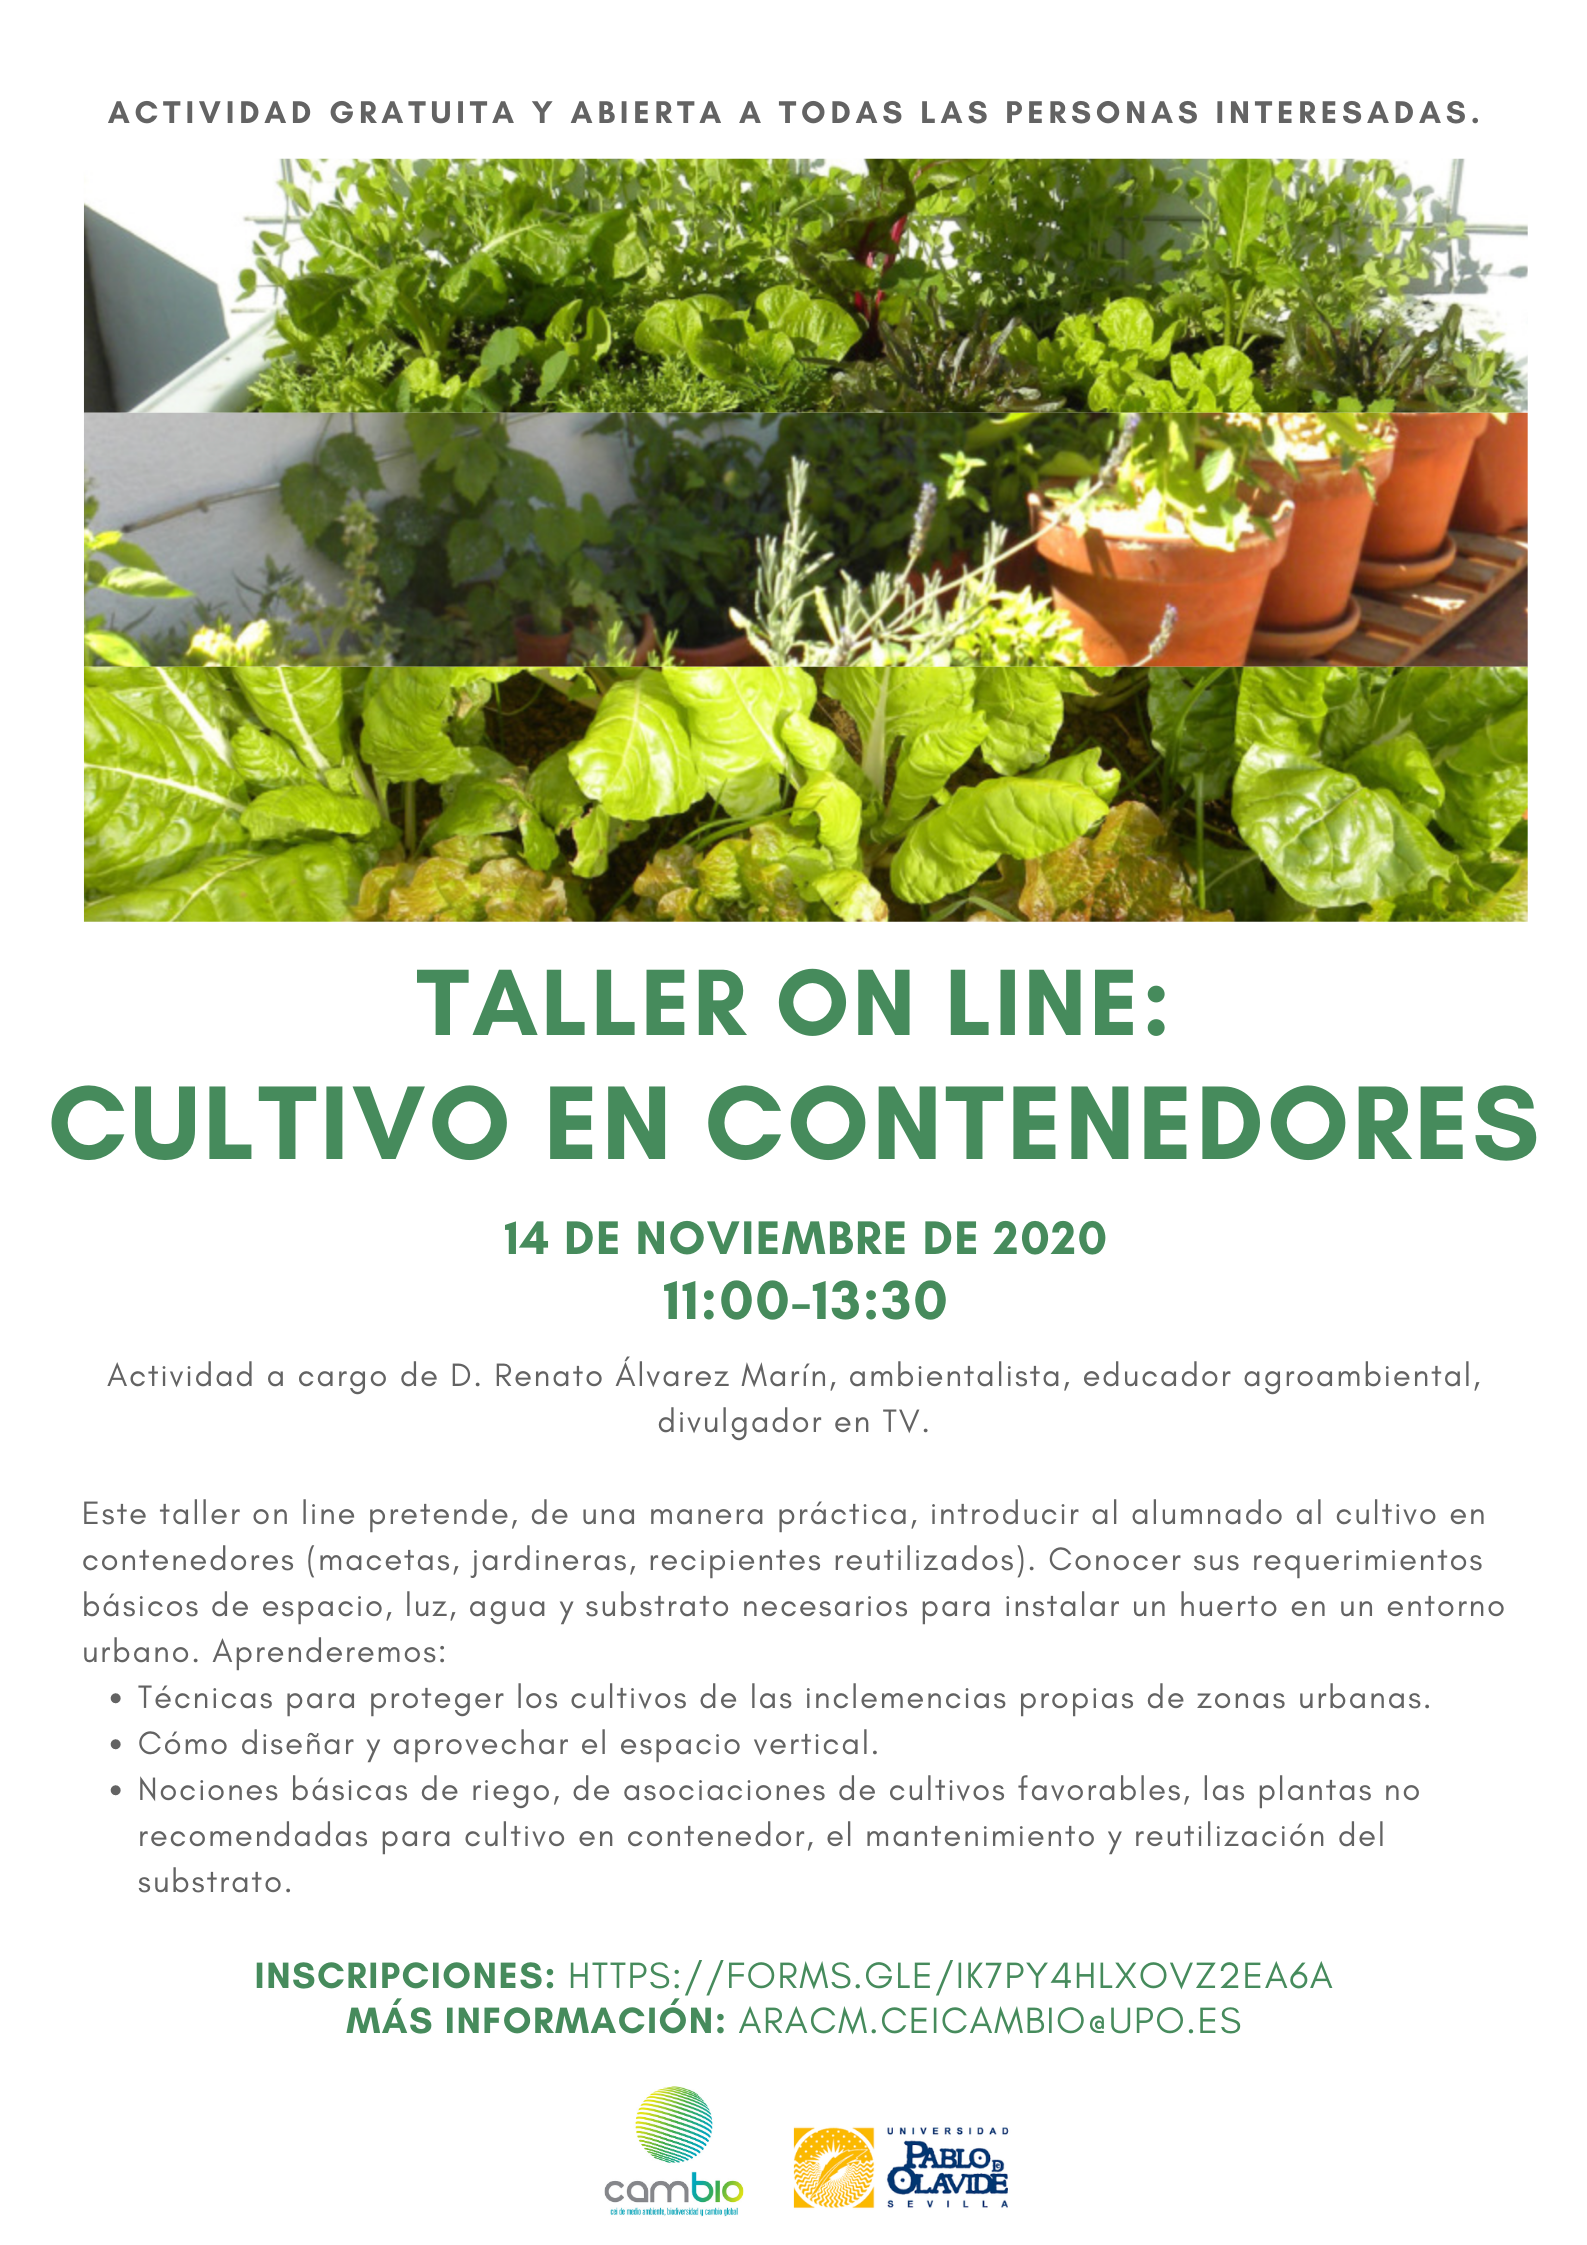 TALLER ON LINE: Cultivo en contenedores: 14 de noviembre